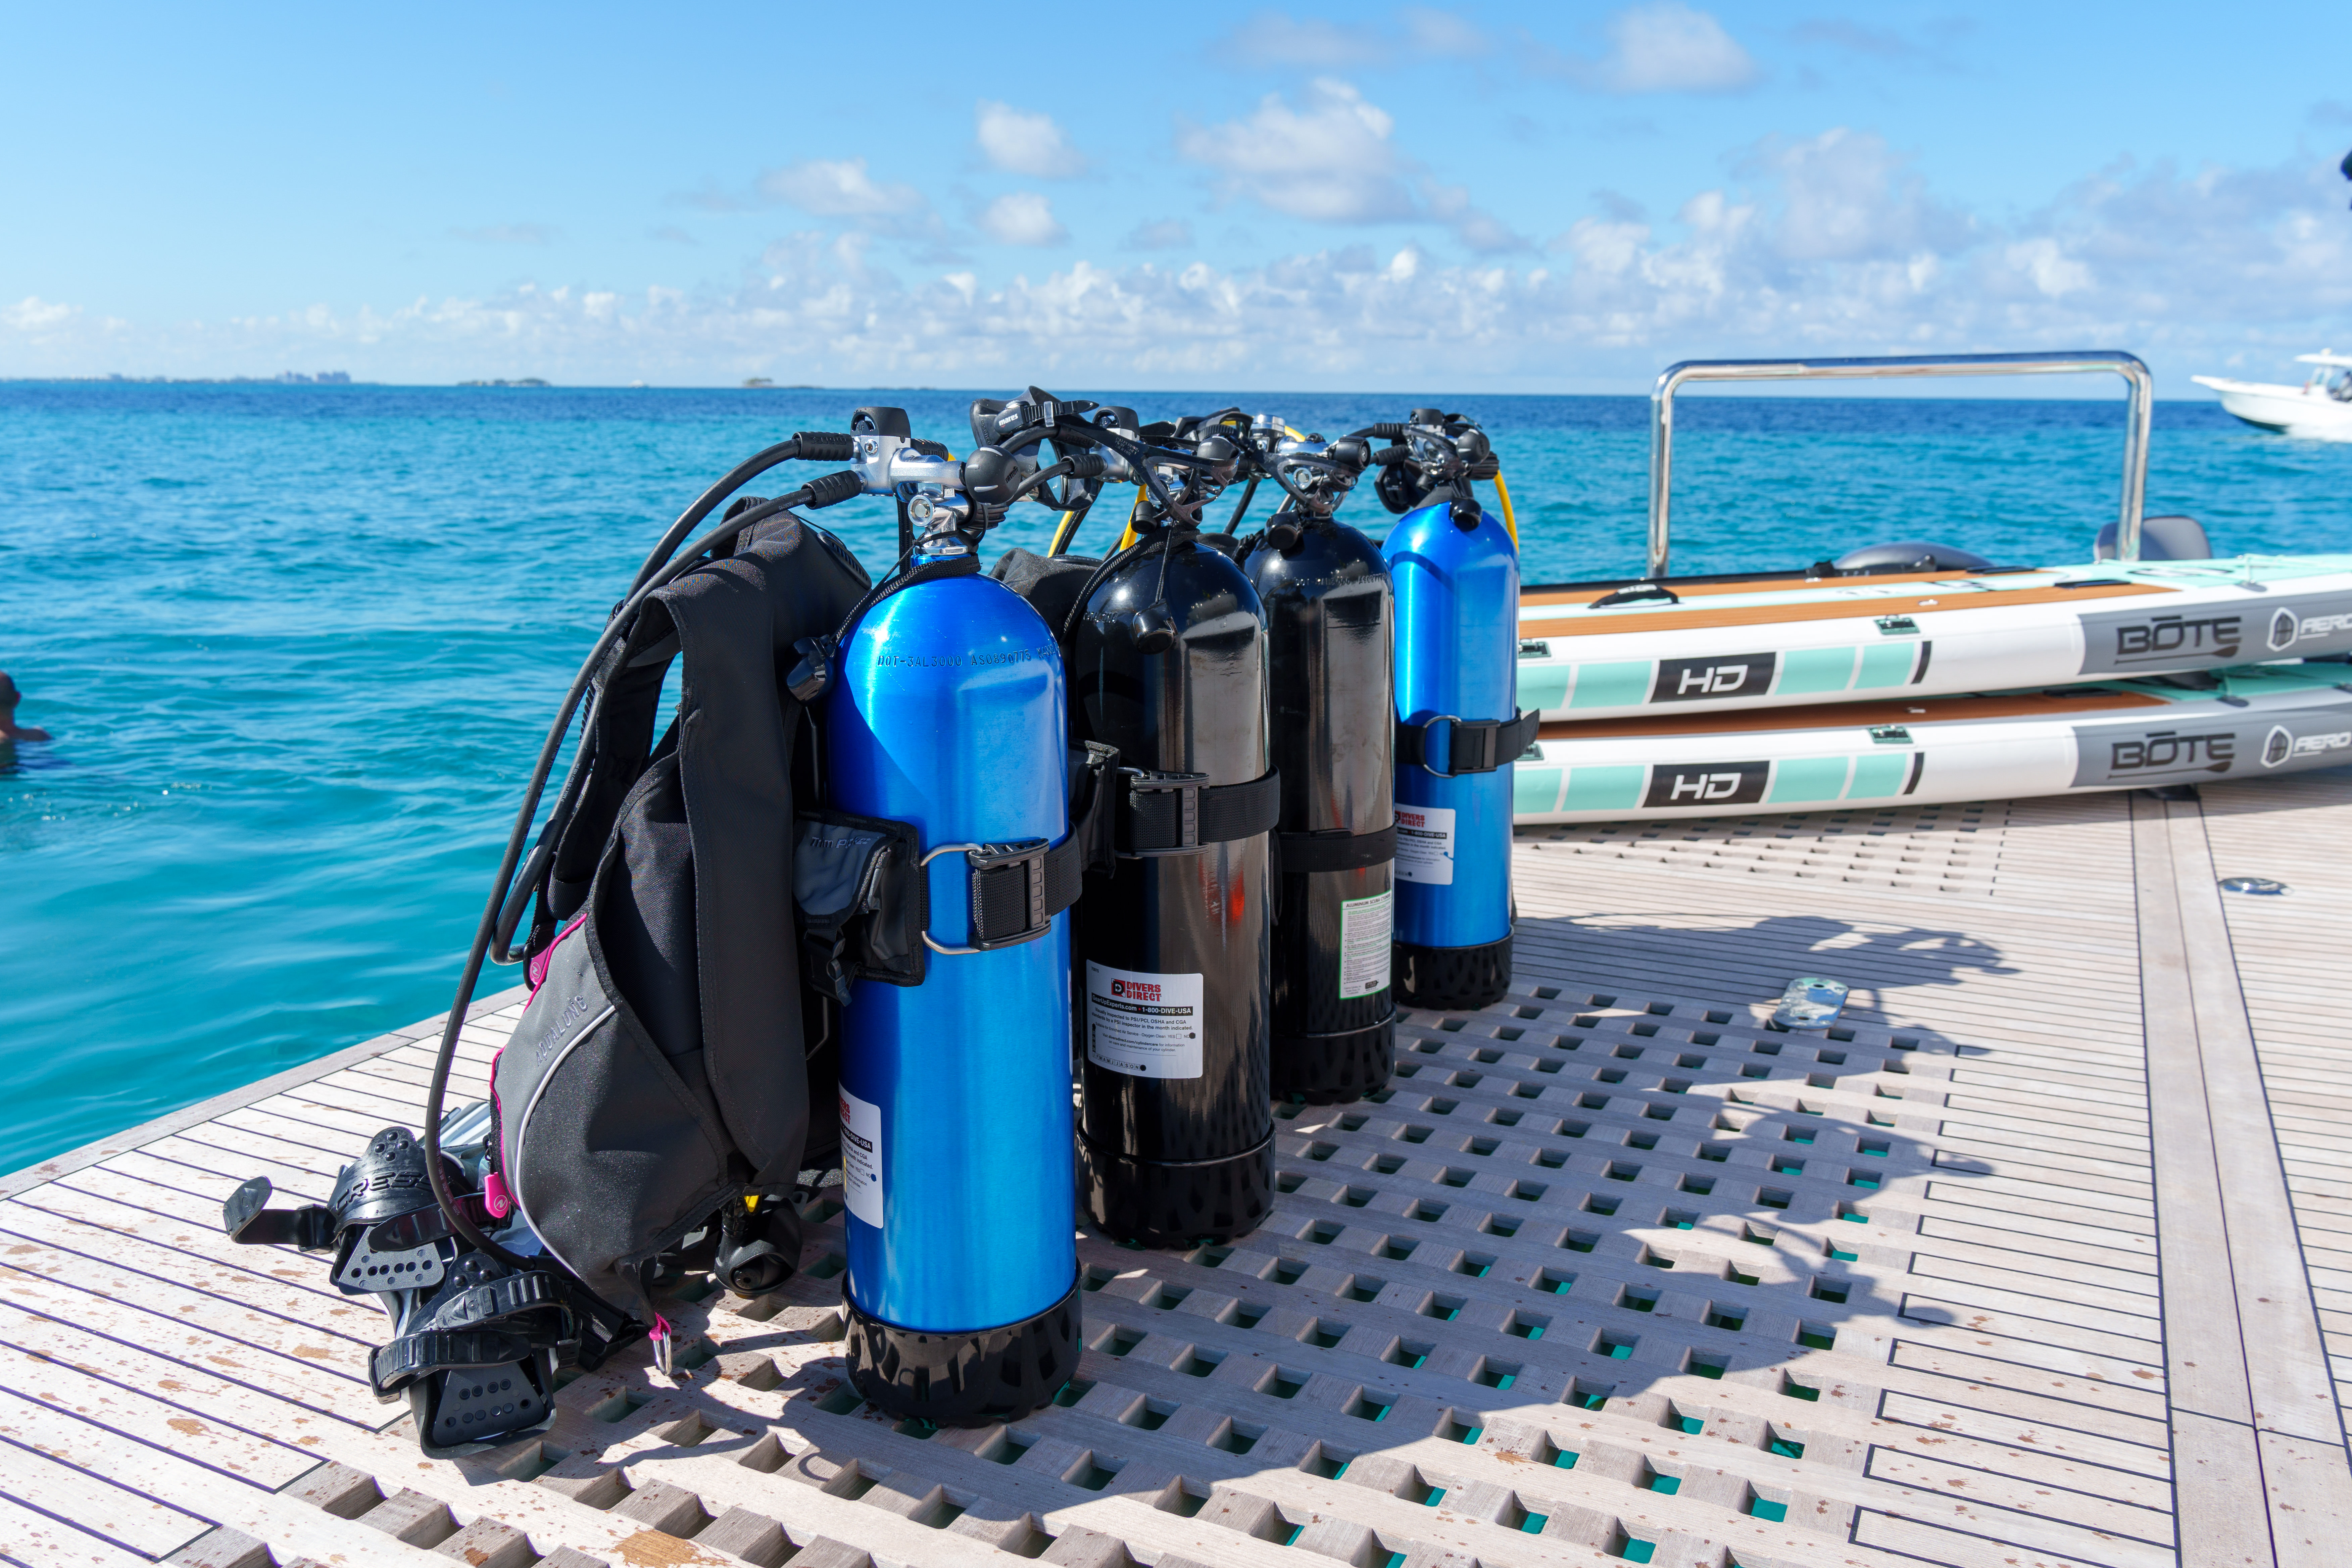 Diving Equipment